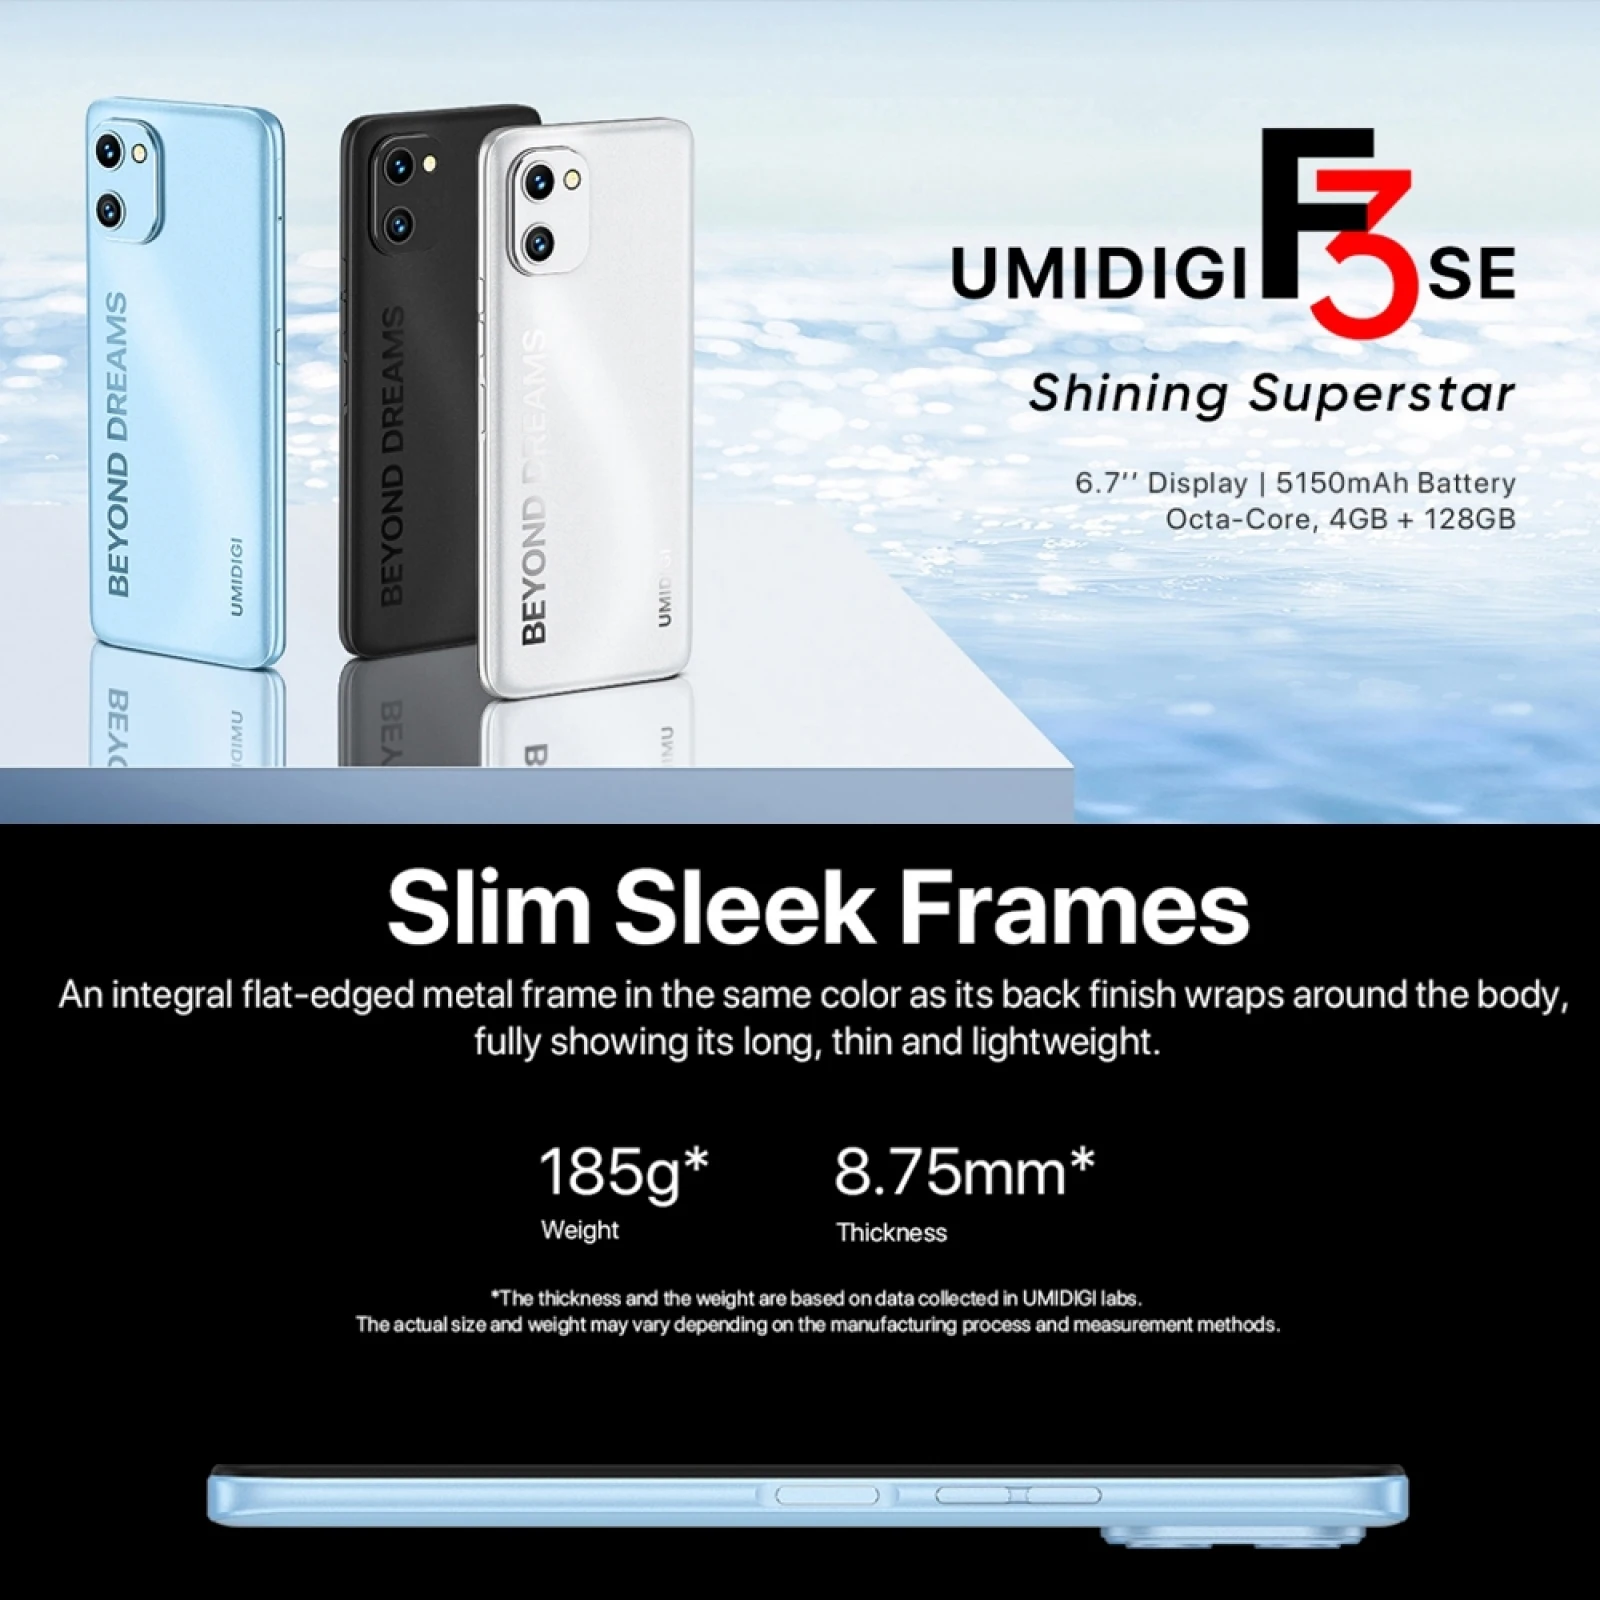 umidigi f3 se global version 6 7 hd screen smartphone 4gb ram 128gb rom octa core 20mp triple camera 5150mah mobile face id free global shipping